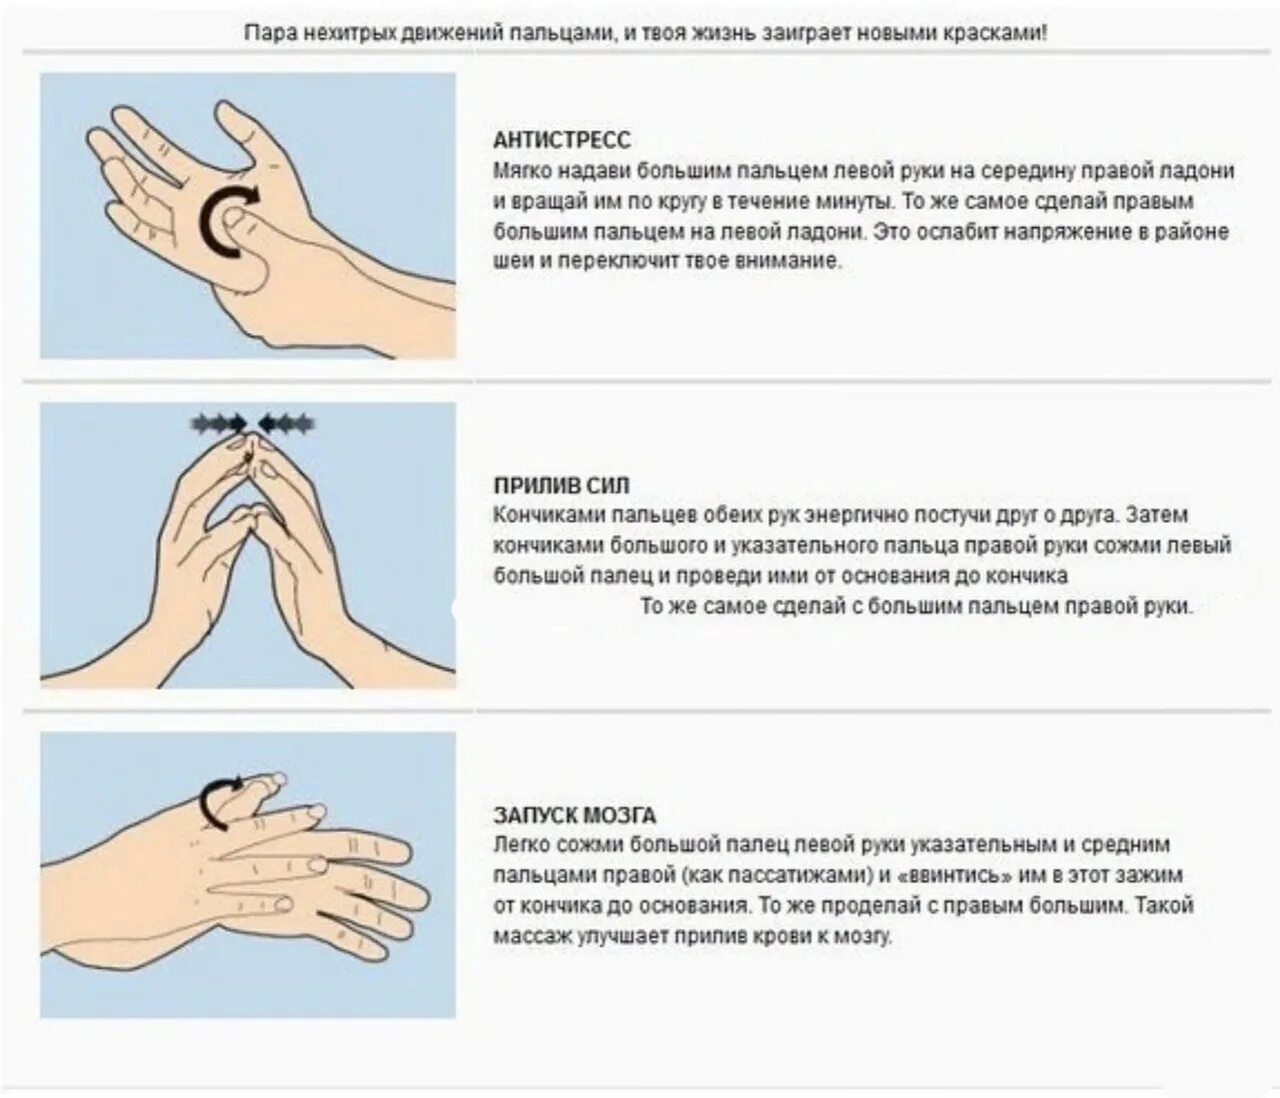 Массаж правое руками. Массаж и самомассаж рук. Упражнения для пальцев. Упражнения для пальцев рук. Самомассаж кистей и пальцев рук.